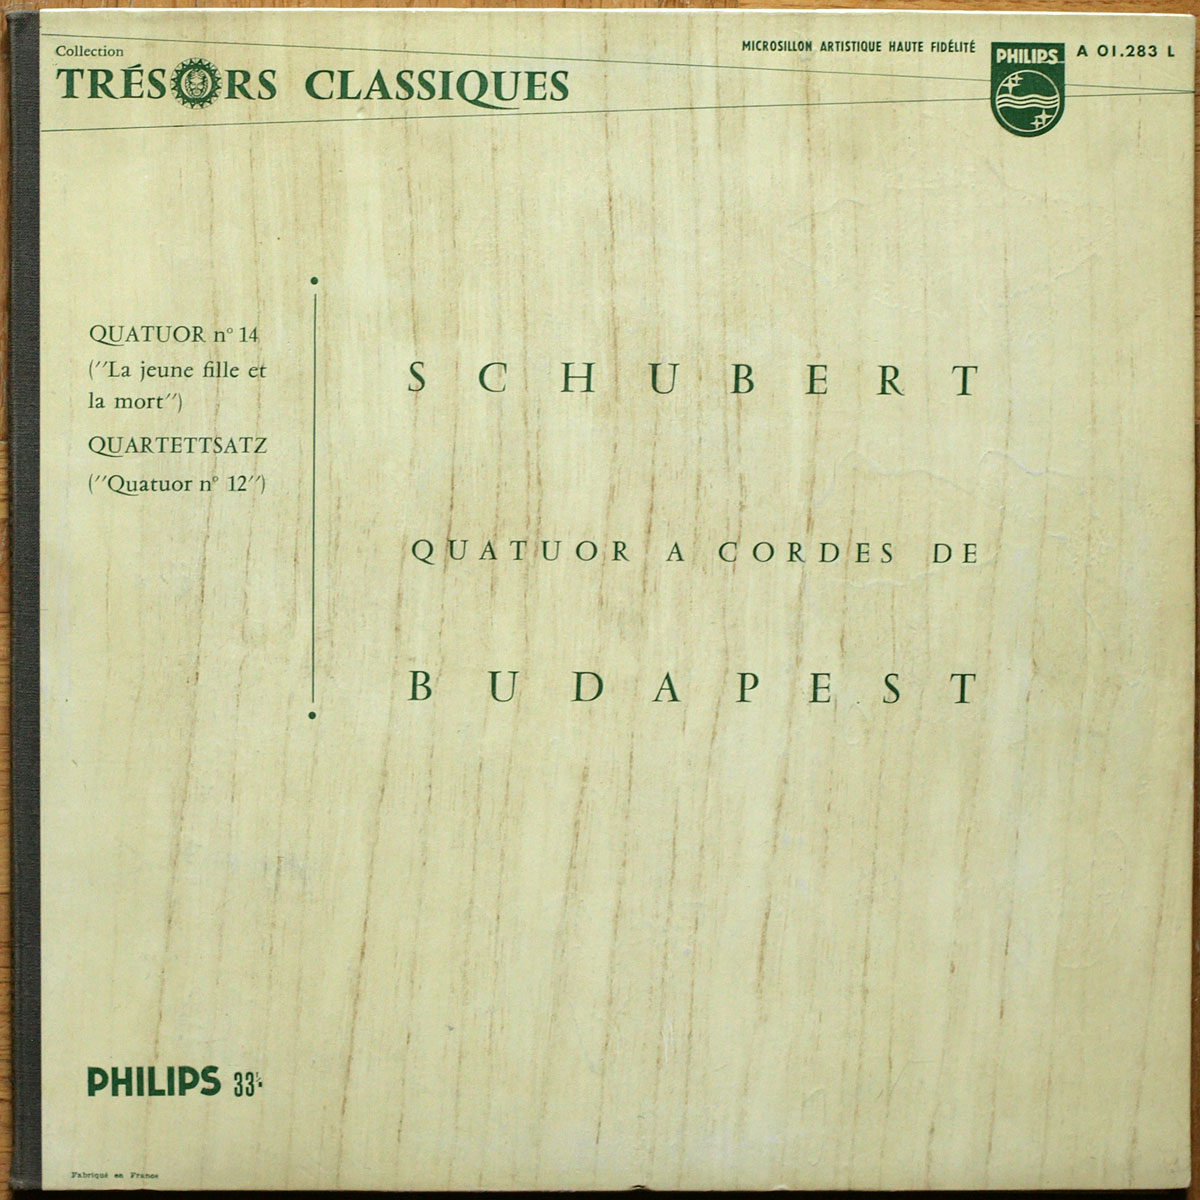 Schubert • Quatuor n° 14 • "Der Tod und das Mädchen" – "La jeune fille et la mort" • Quartettsatz n° 12 • Philips Minigroove A 01.283 L • Budapest String Quartet